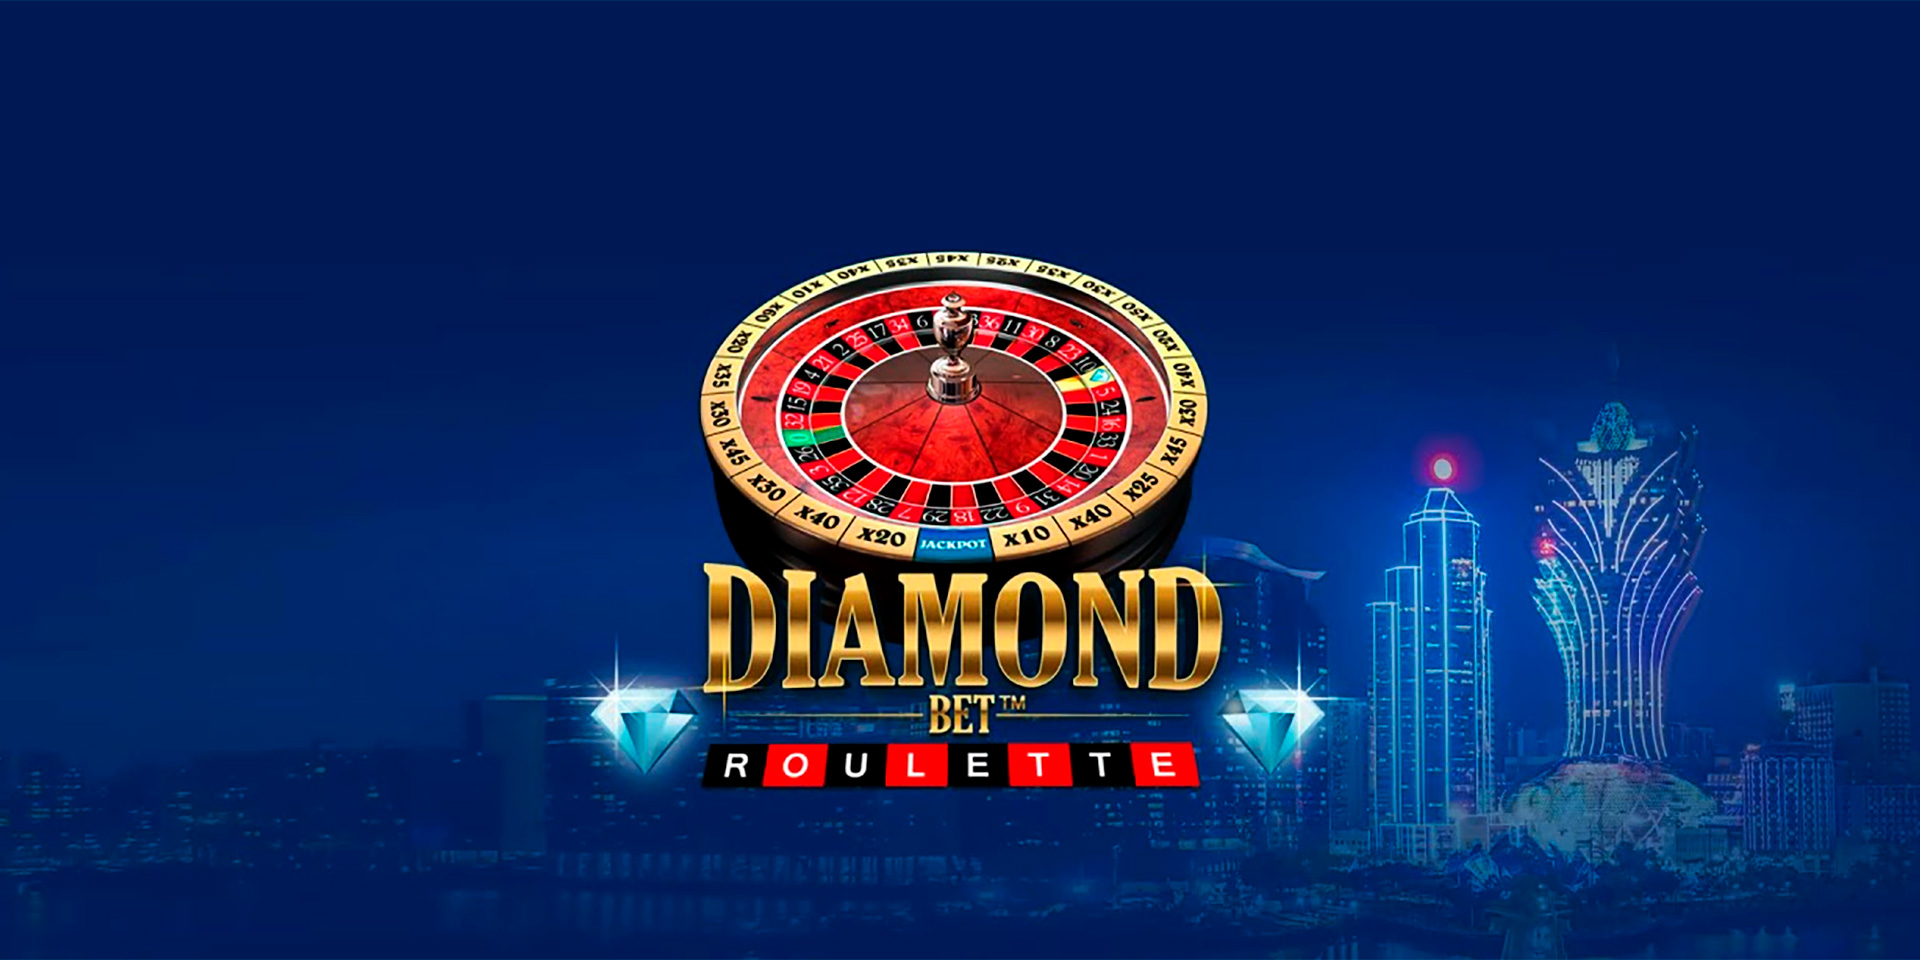 Diamond roulette